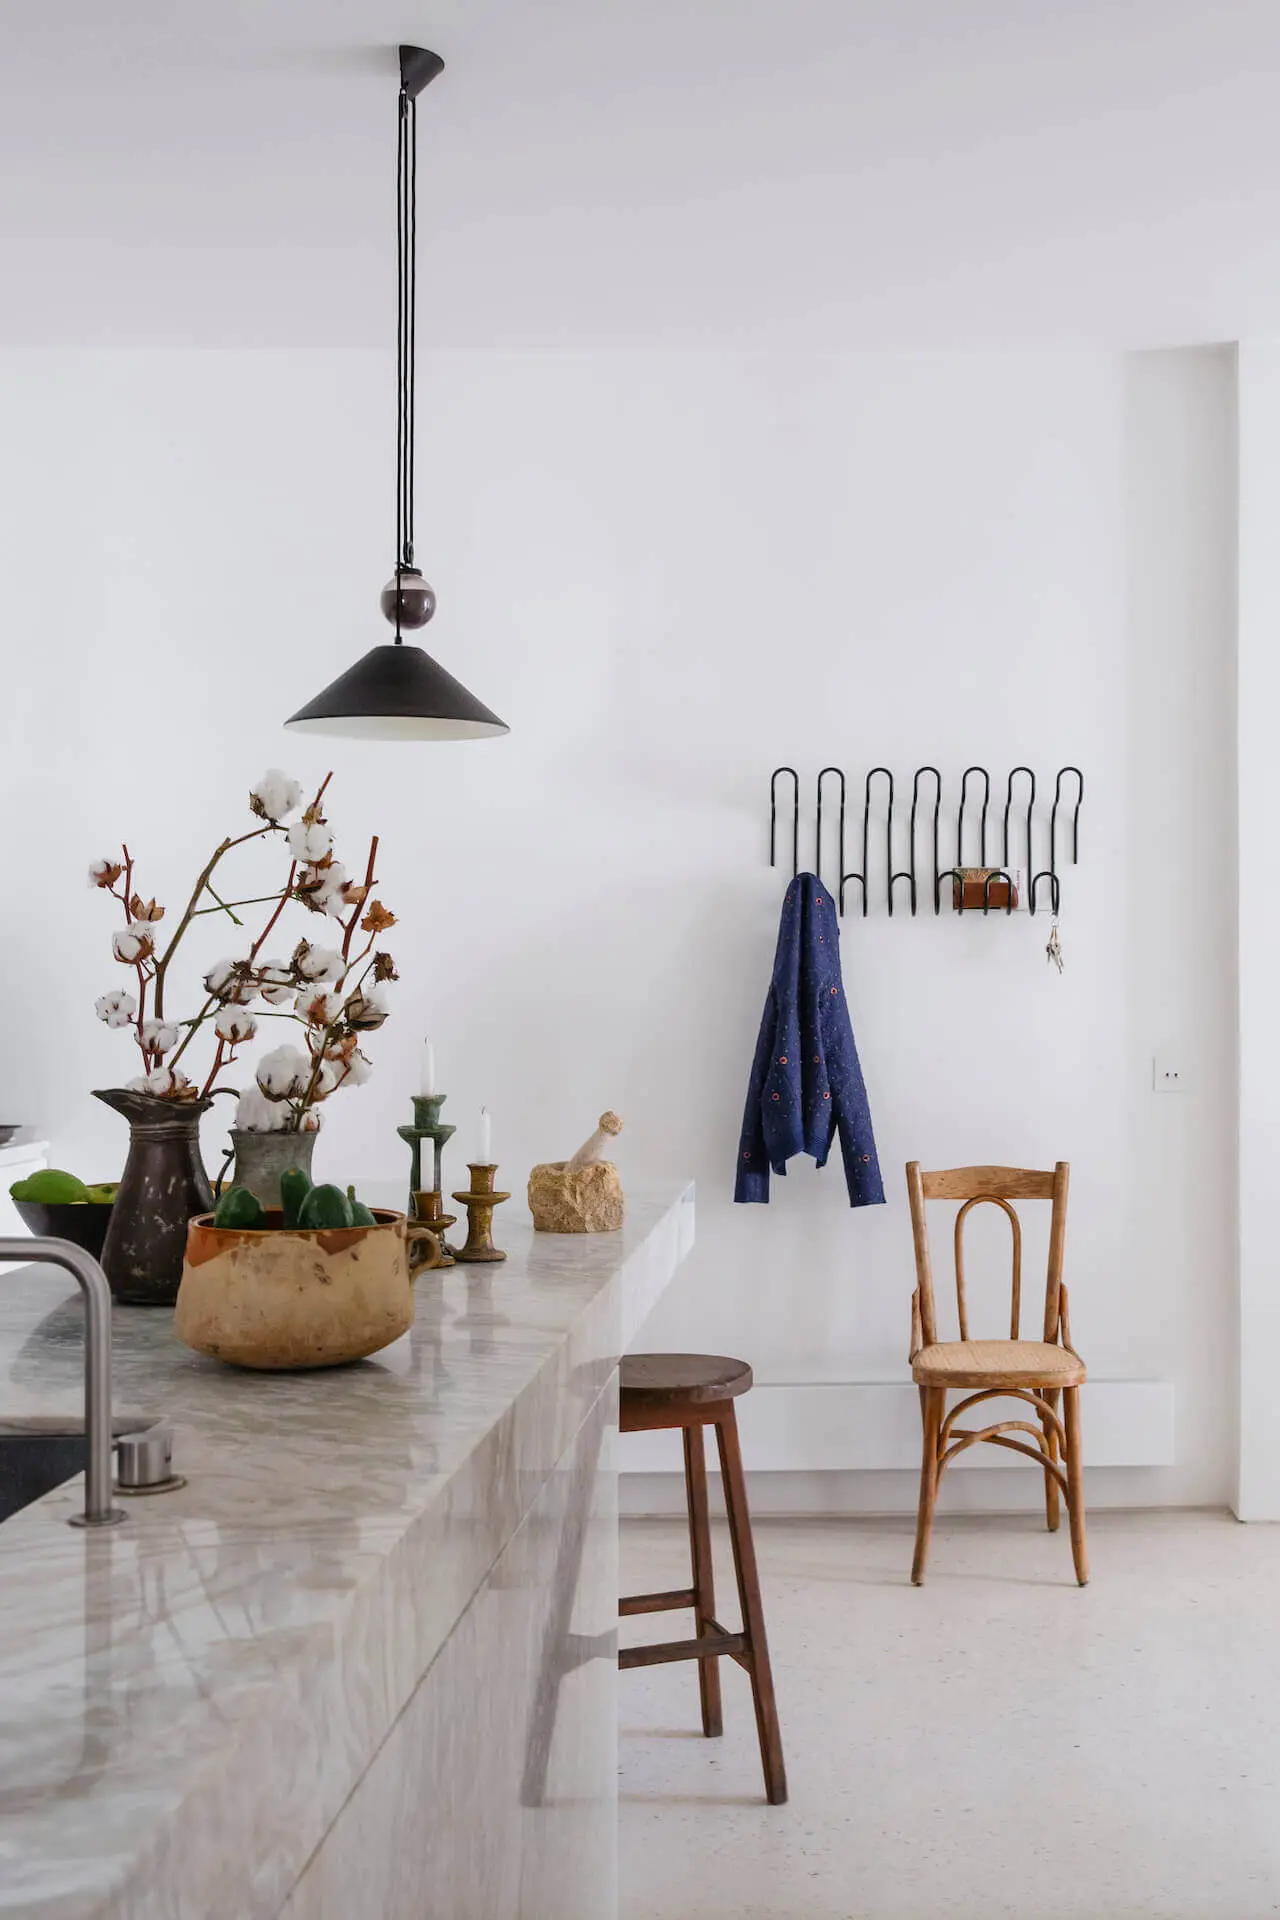 Carl Gerges - Apartment kitchen details